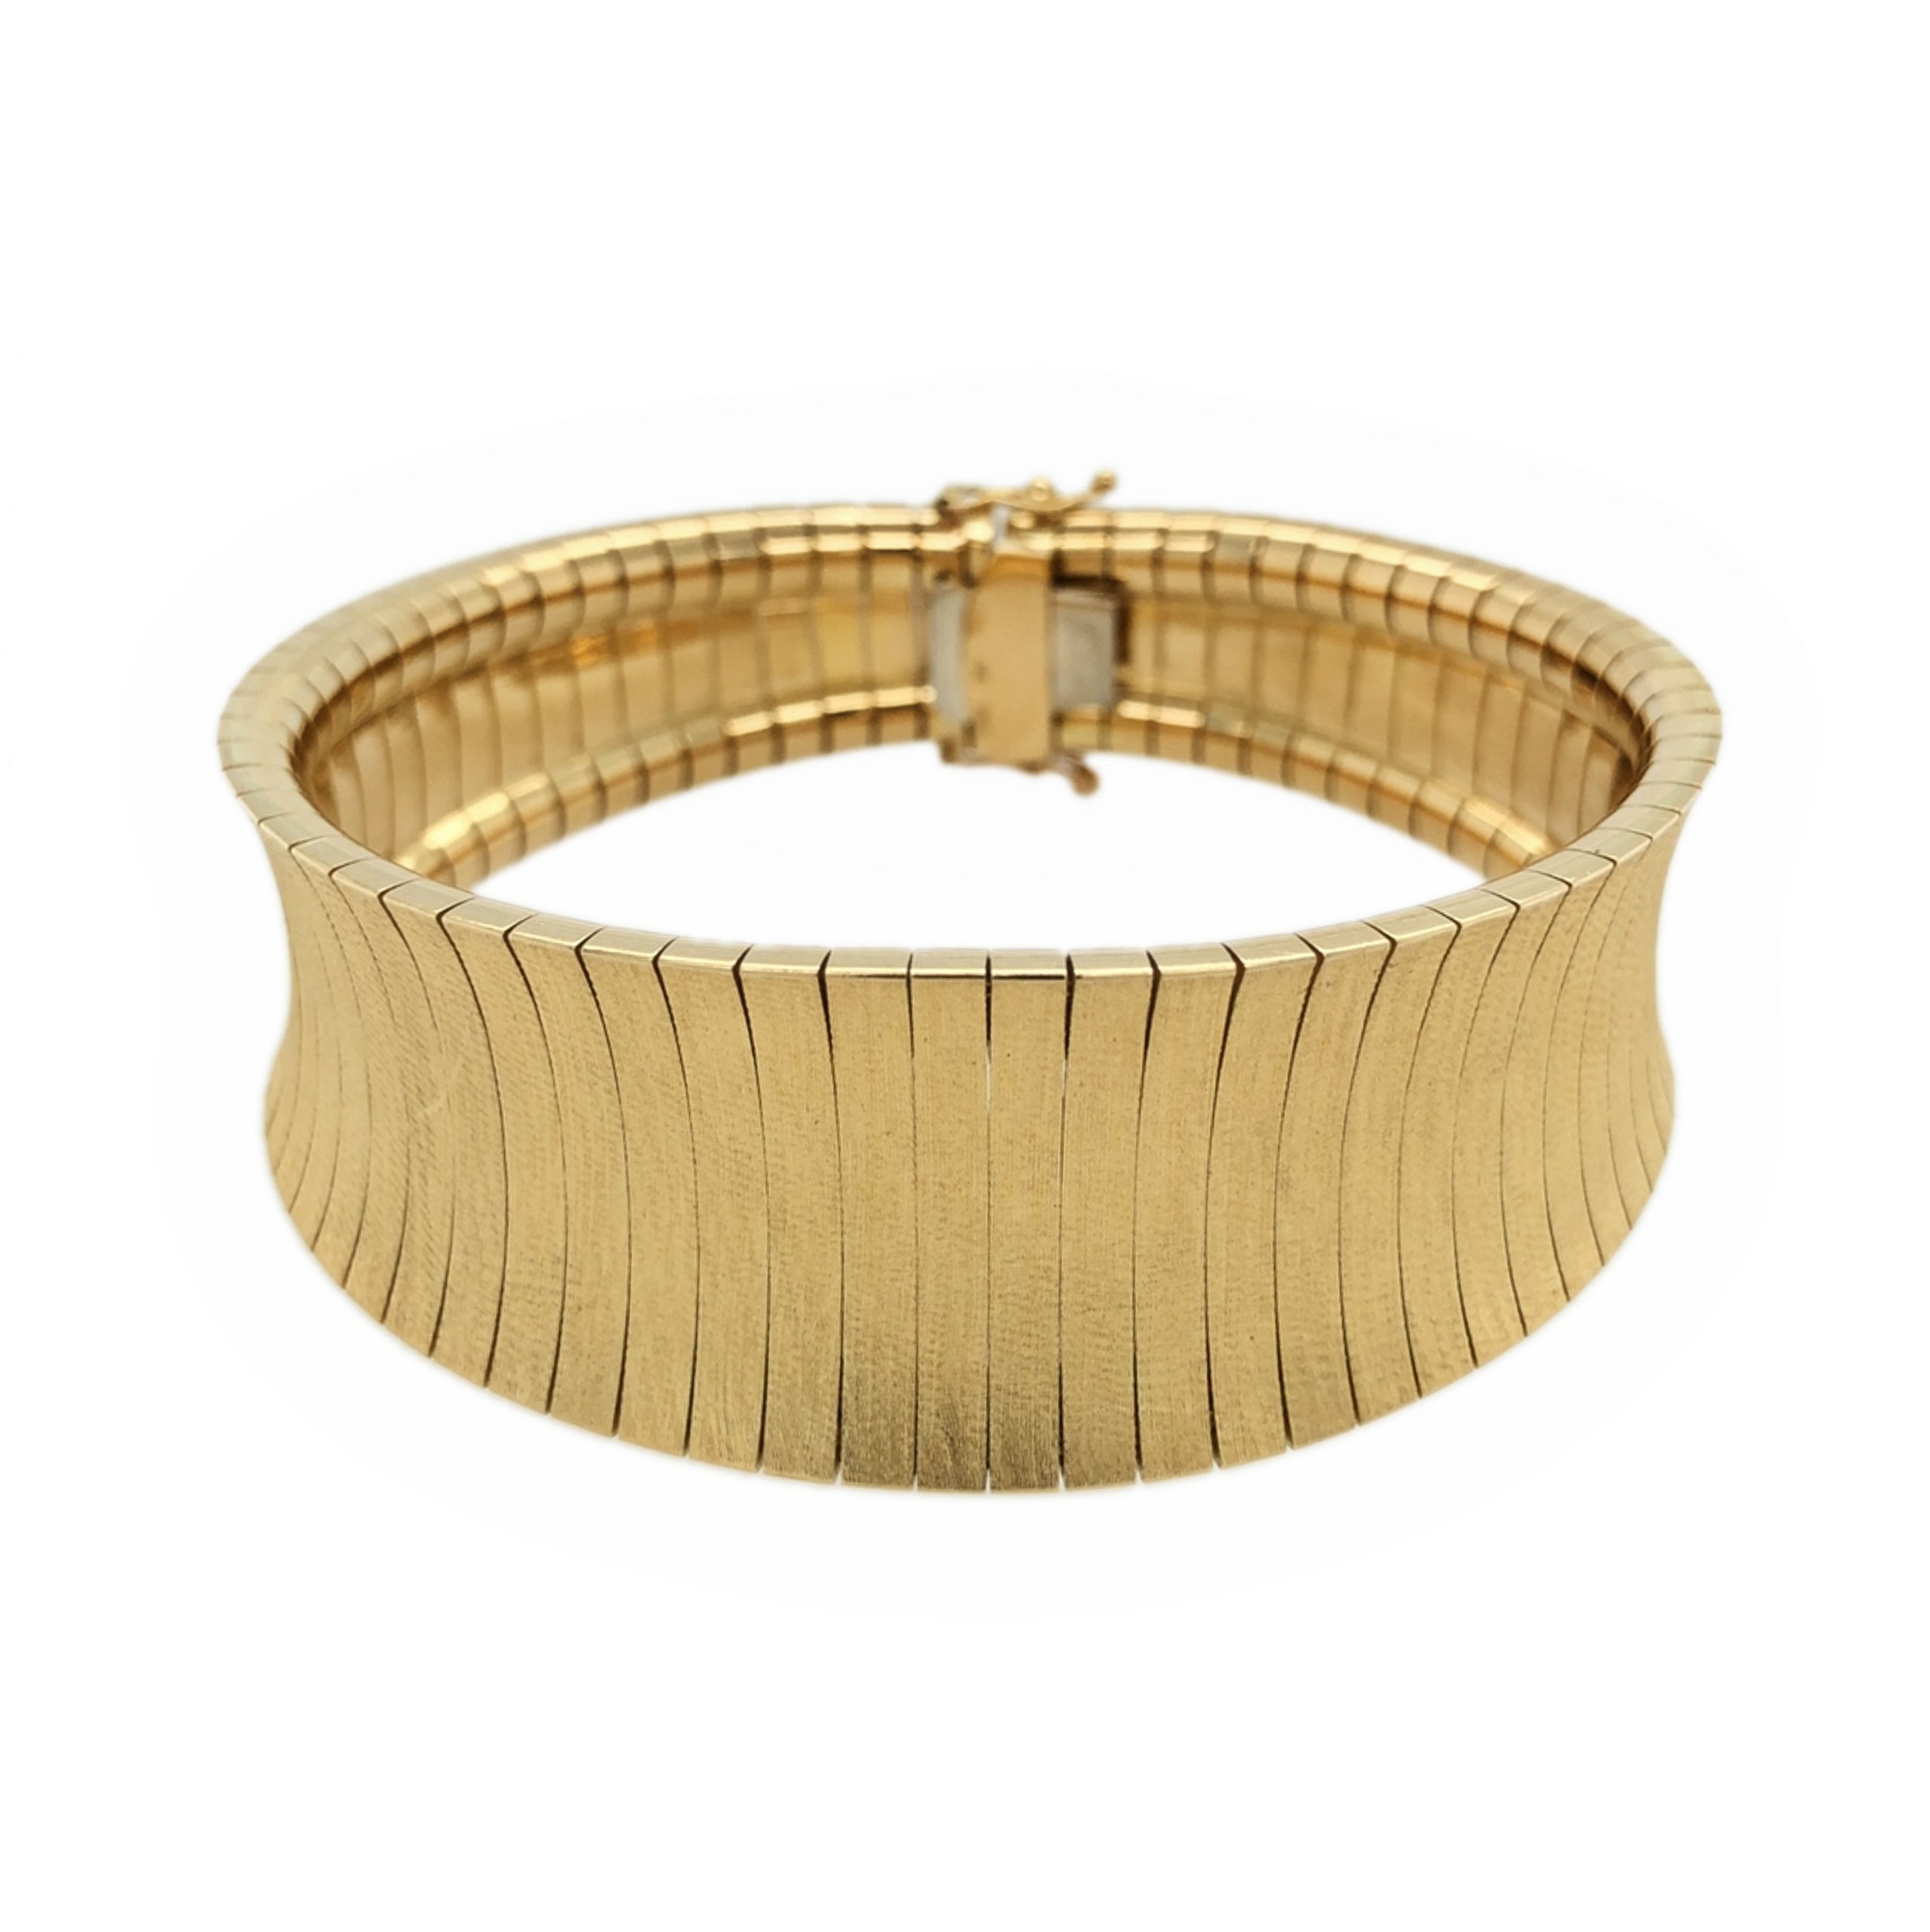 YELLOW GOLD FLEXIBLE BRACELET - Argo & Lehne Jewelers